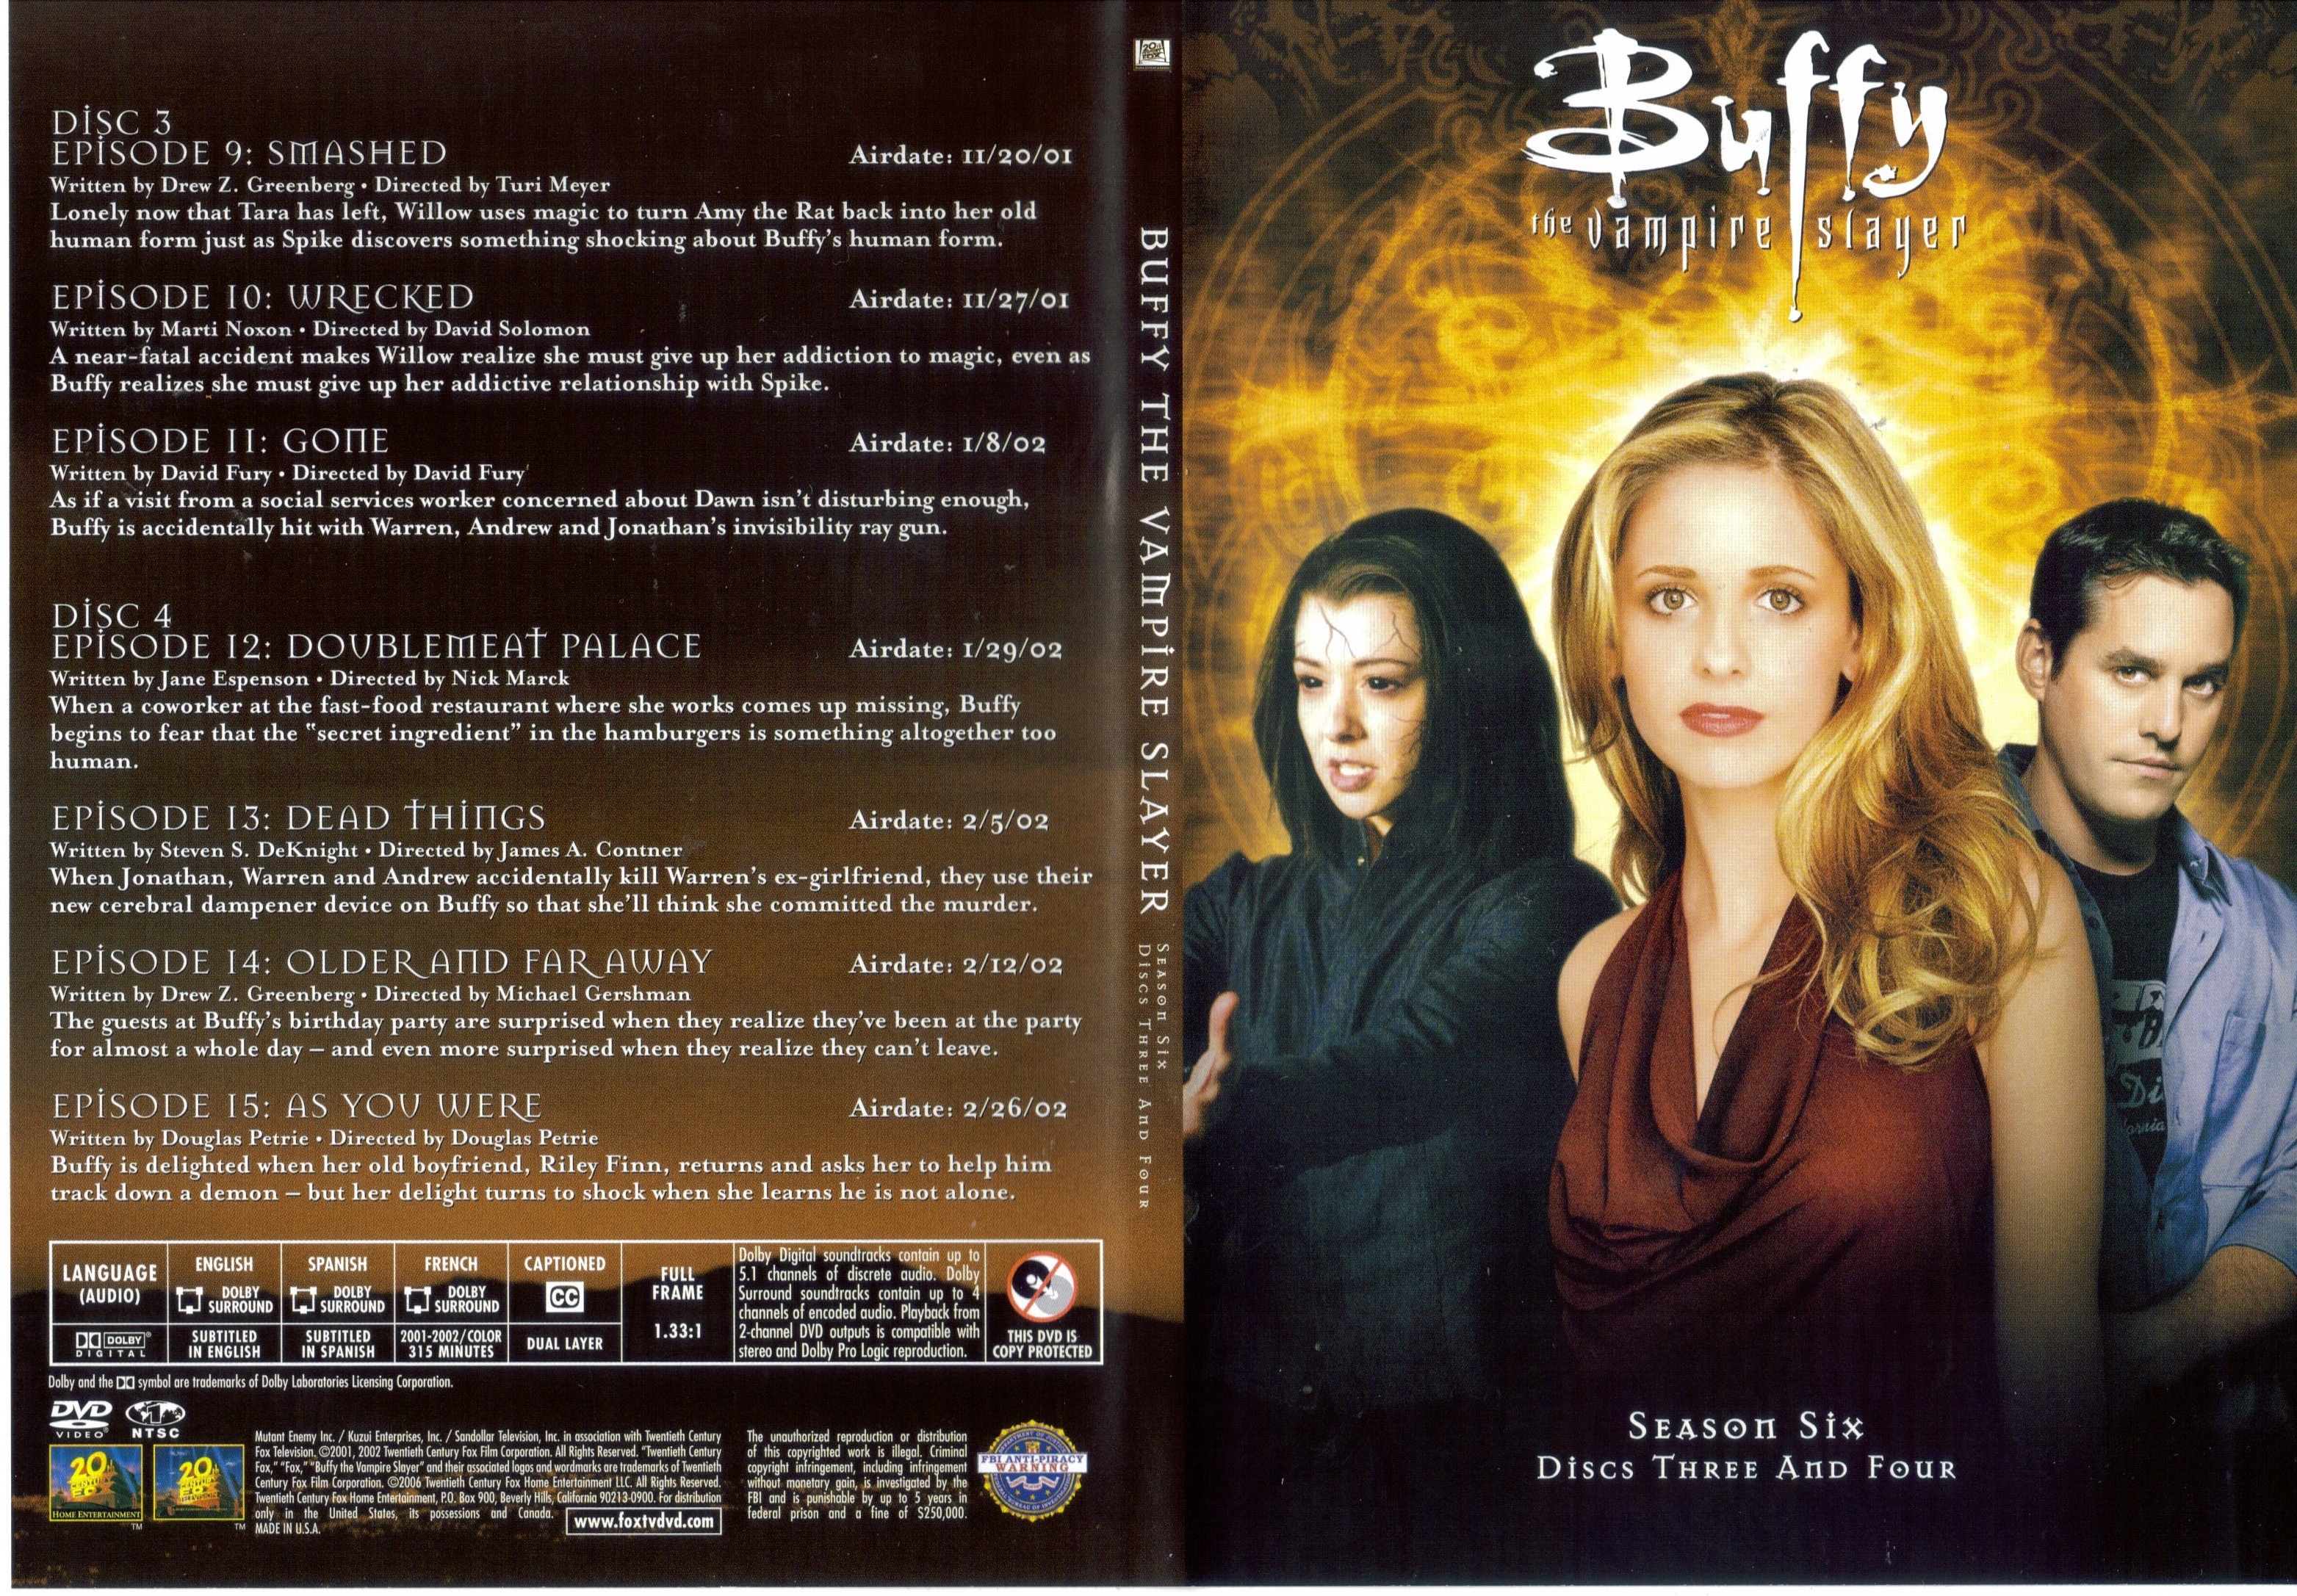 Jaquette DVD Buffy Saison 6 DVD 2 (Canadienne)